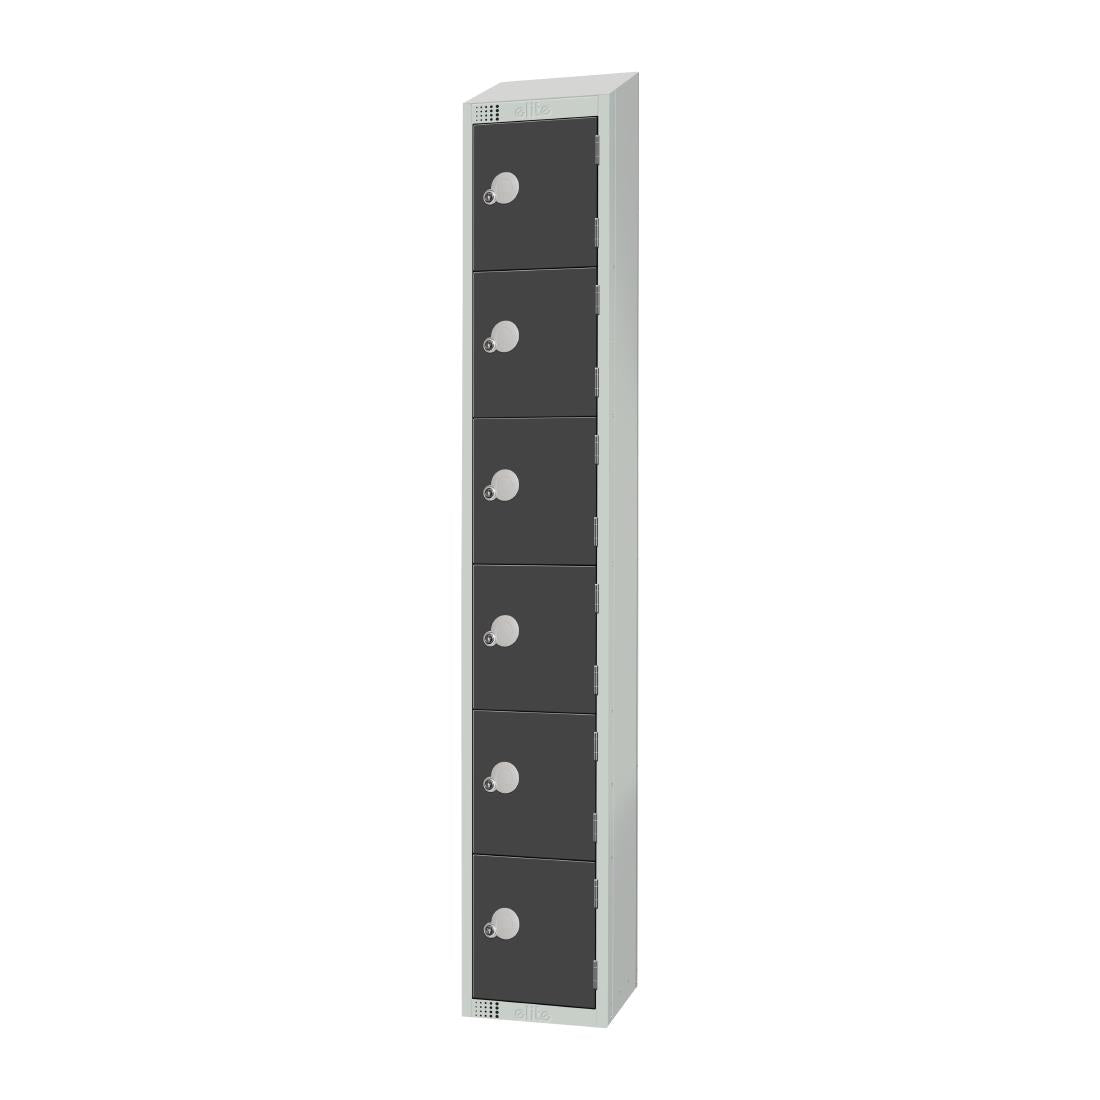 GR682-CLS Elite Six Door Manual Combination Locker Locker Graphite Grey JD Catering Equipment Solutions Ltd